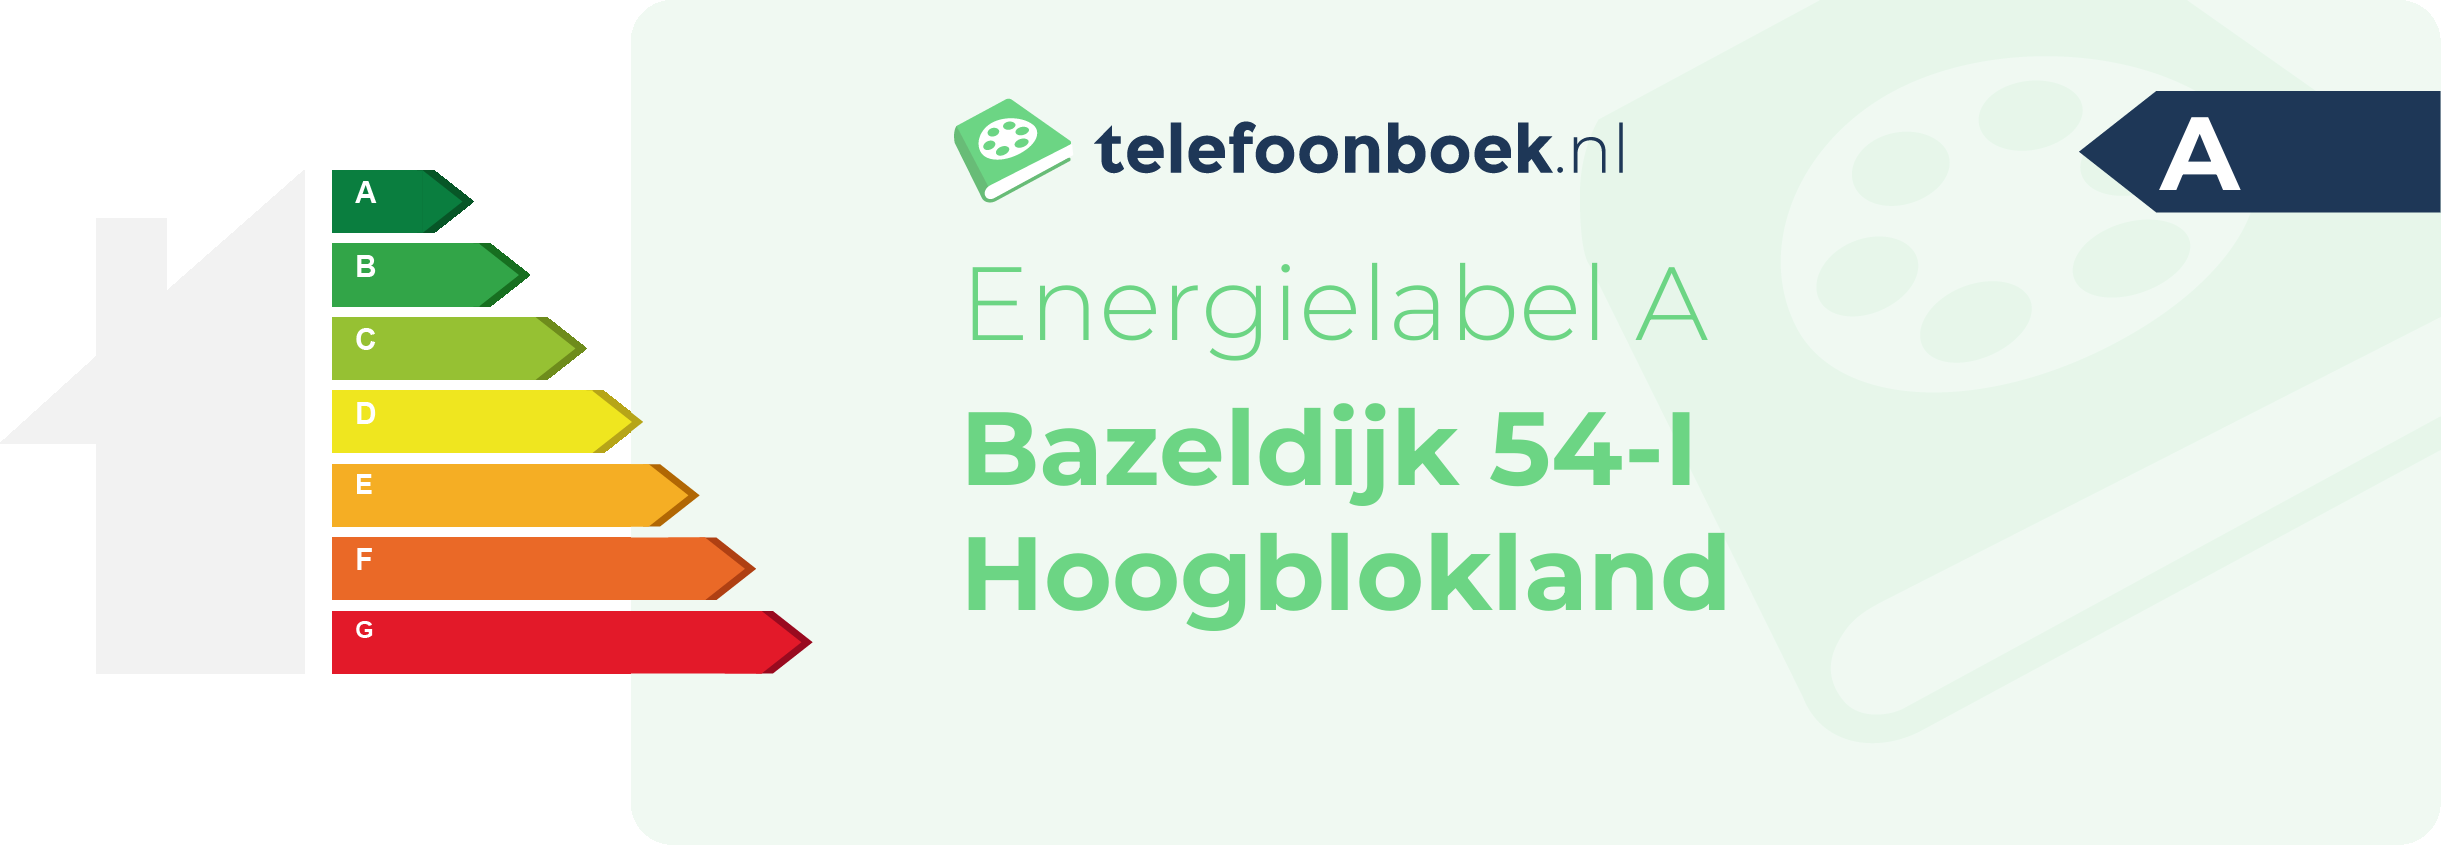 Energielabel Bazeldijk 54-I Hoogblokland